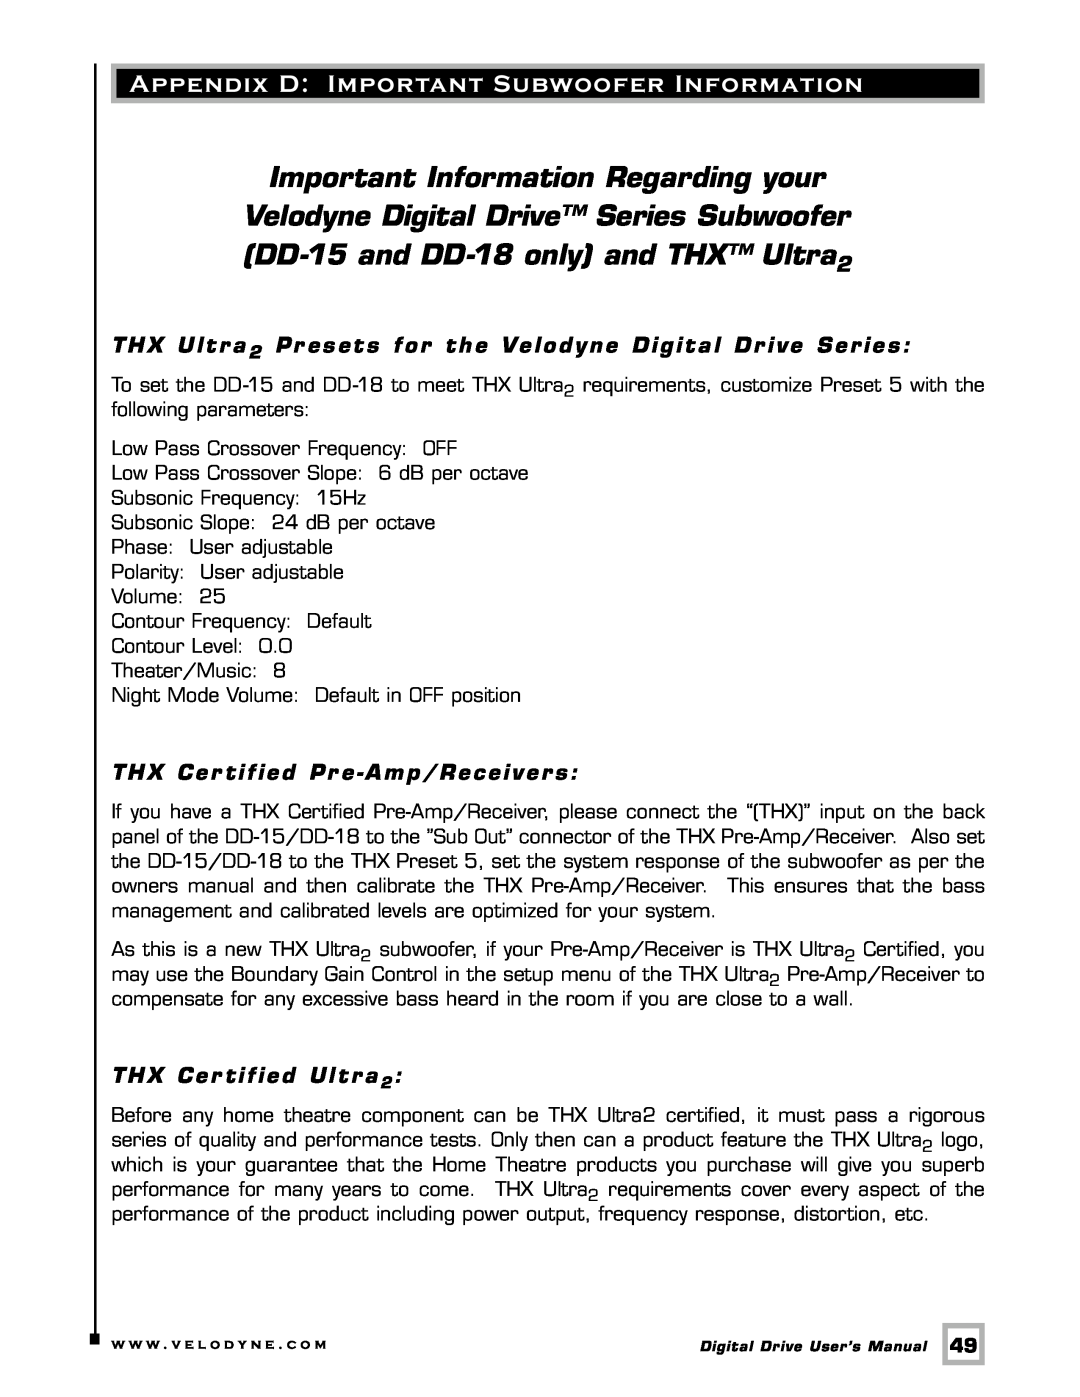 Velodyne Acoustics Digital Drive Appendix D Important Subwoofer Information, THX Cer tified Pr e - Amp/Receivers 